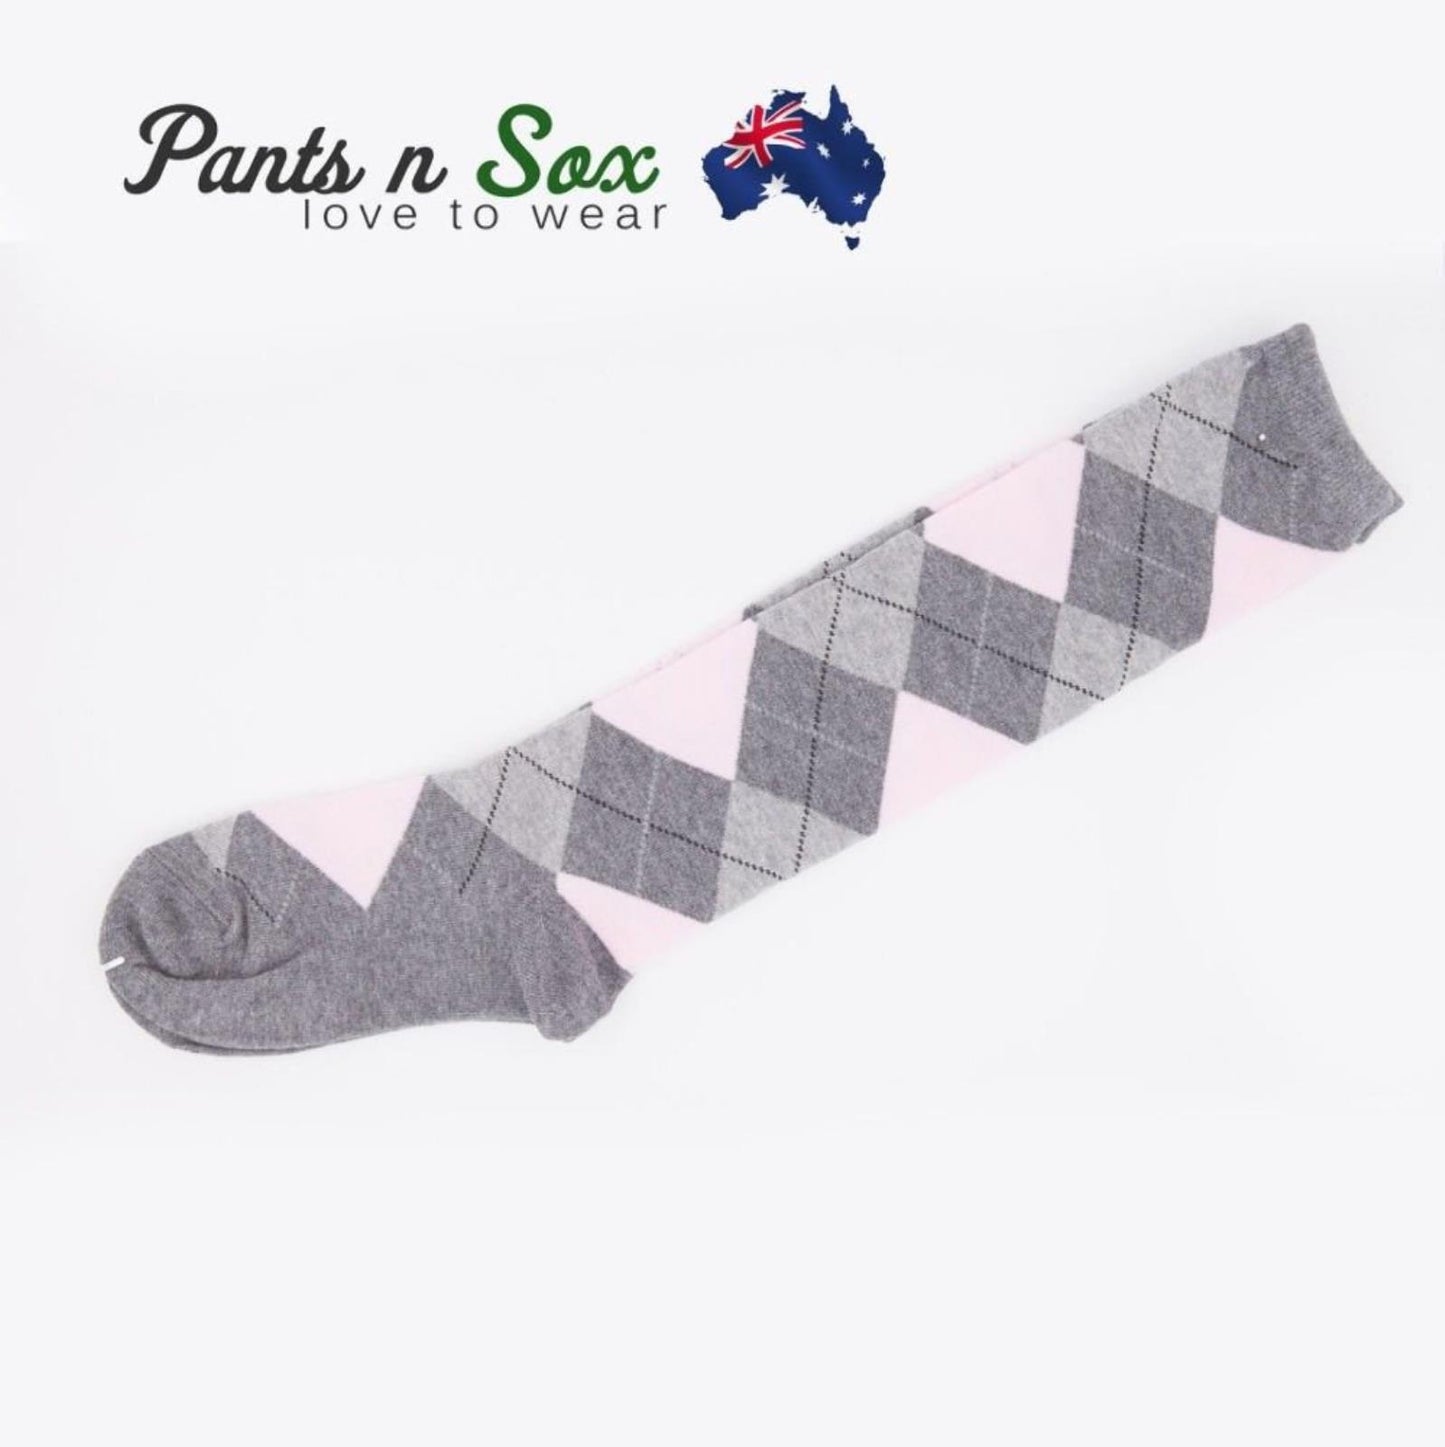 New Womens Size 2-8 Check Diamond Knee High Socks Argyle Pattern AU Stock Party - Pantsnsox